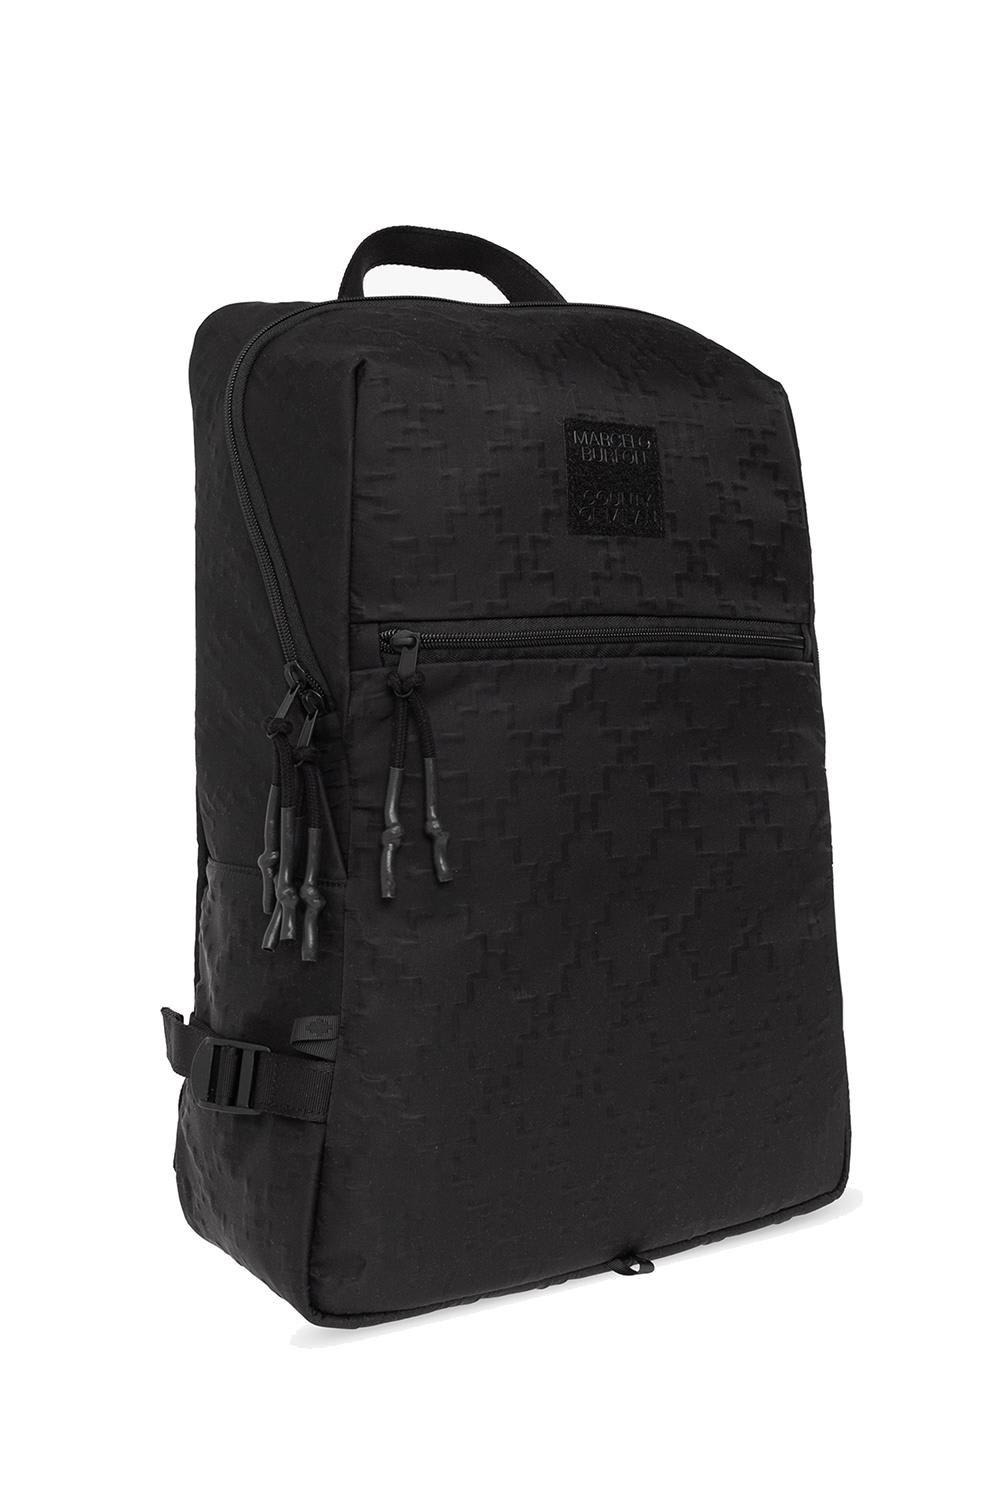 Shop Marcelo Burlon County Of Milan Logo-patch Zipped Backpack In Black Black